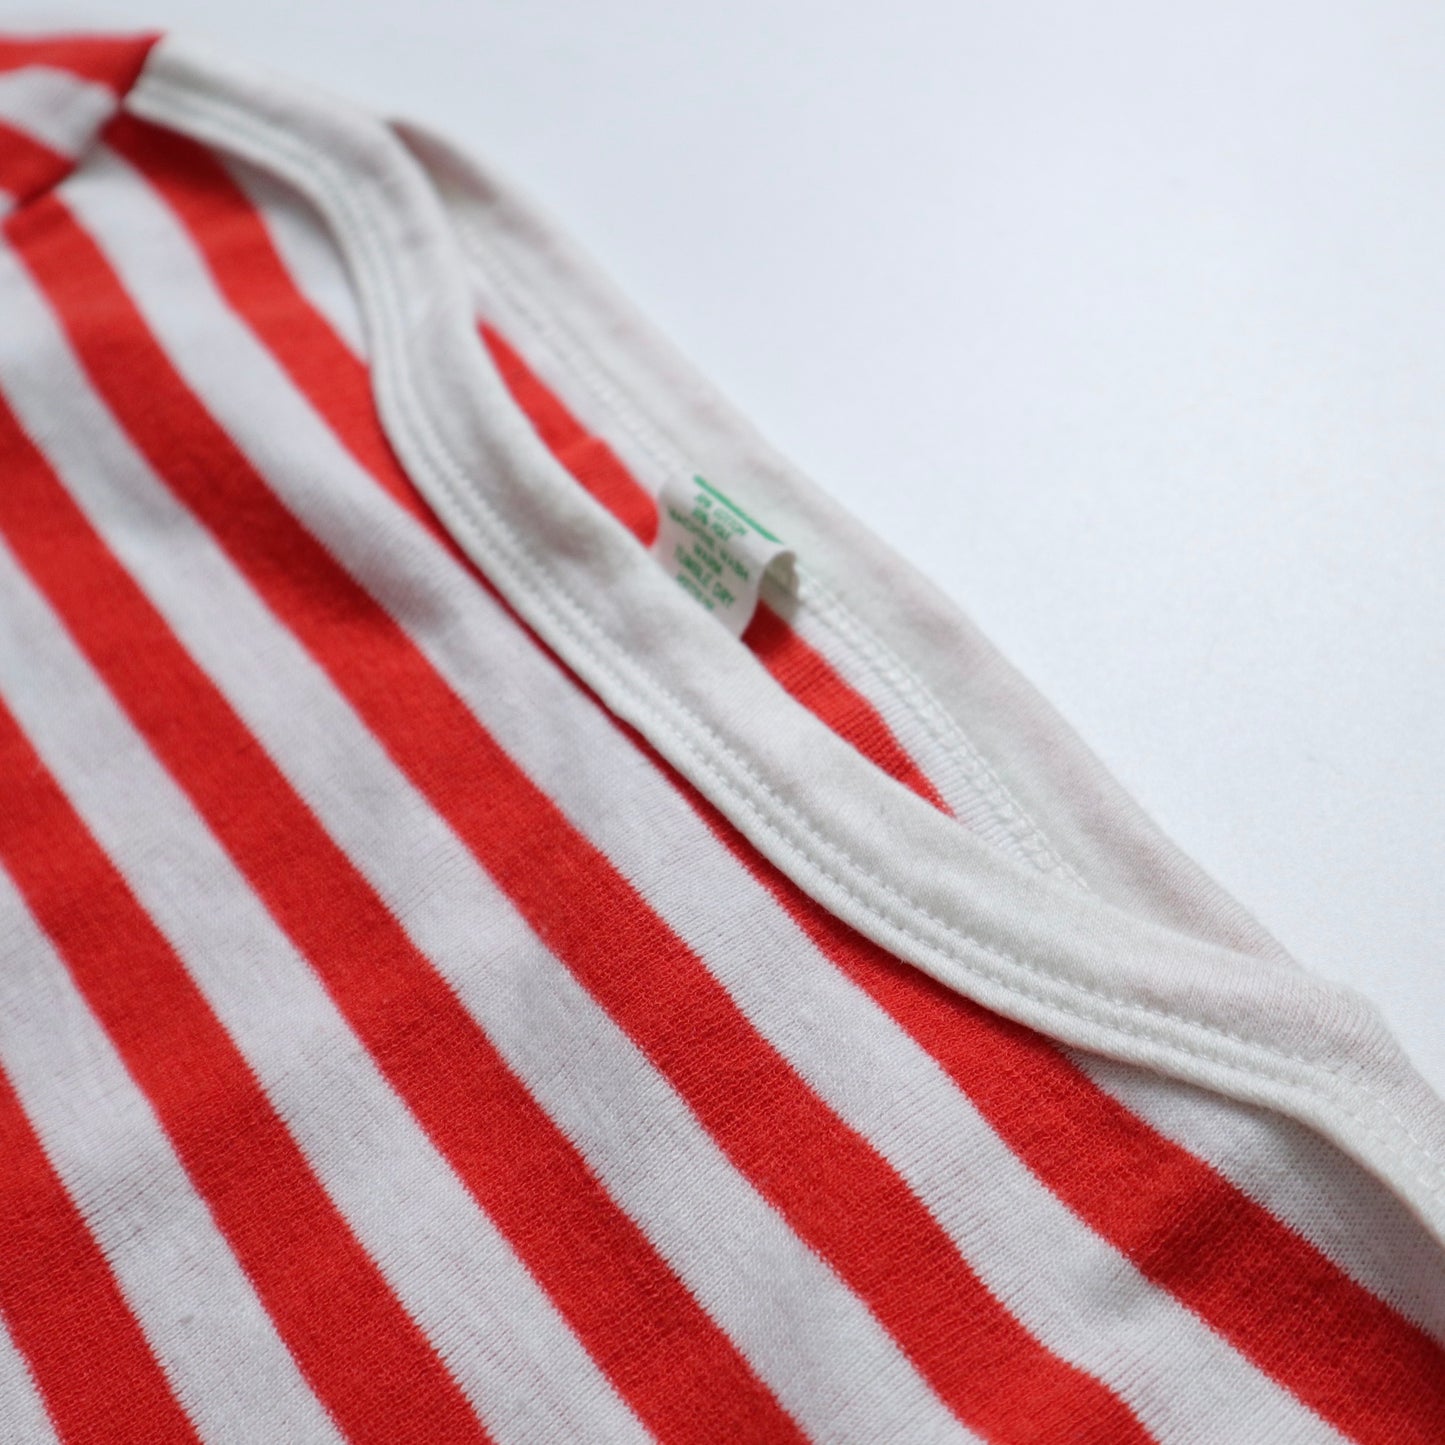 1980s boat collar striped top American striped tee